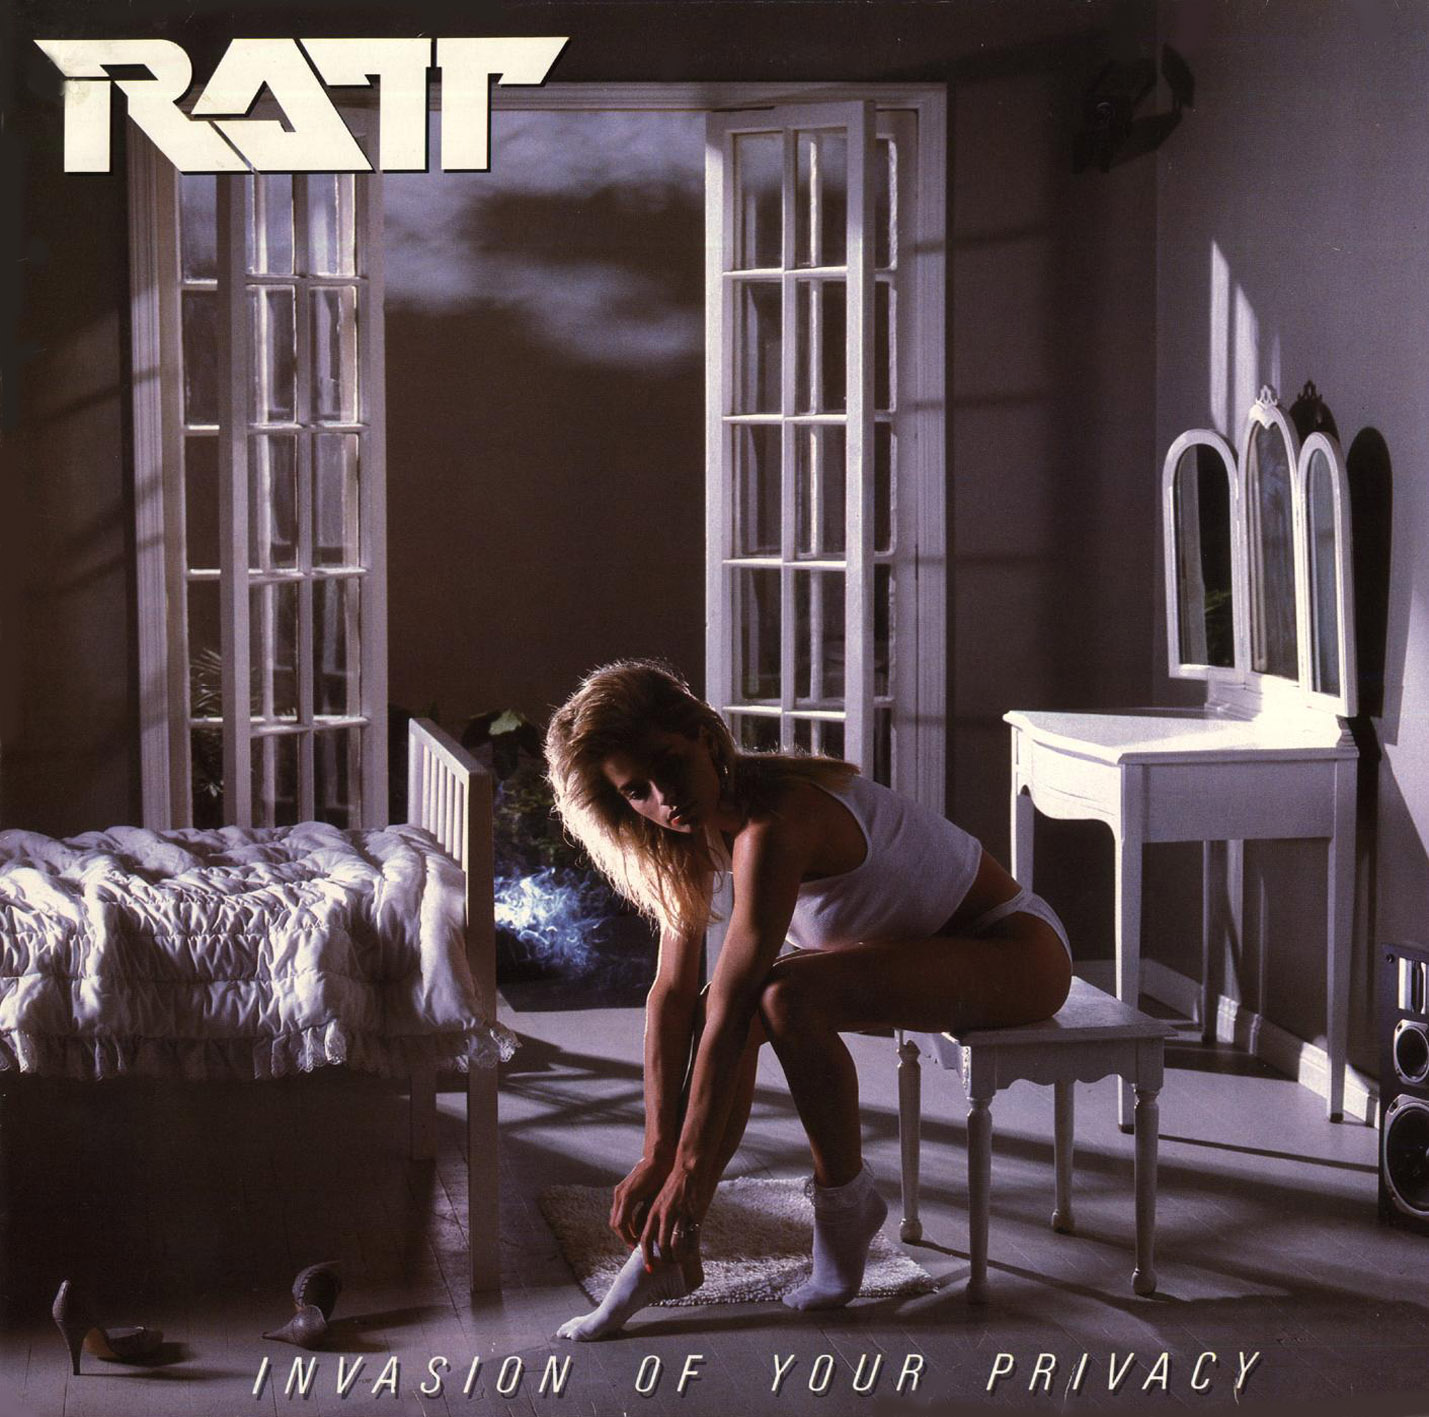 Ratt invasion of your privacy album cover 